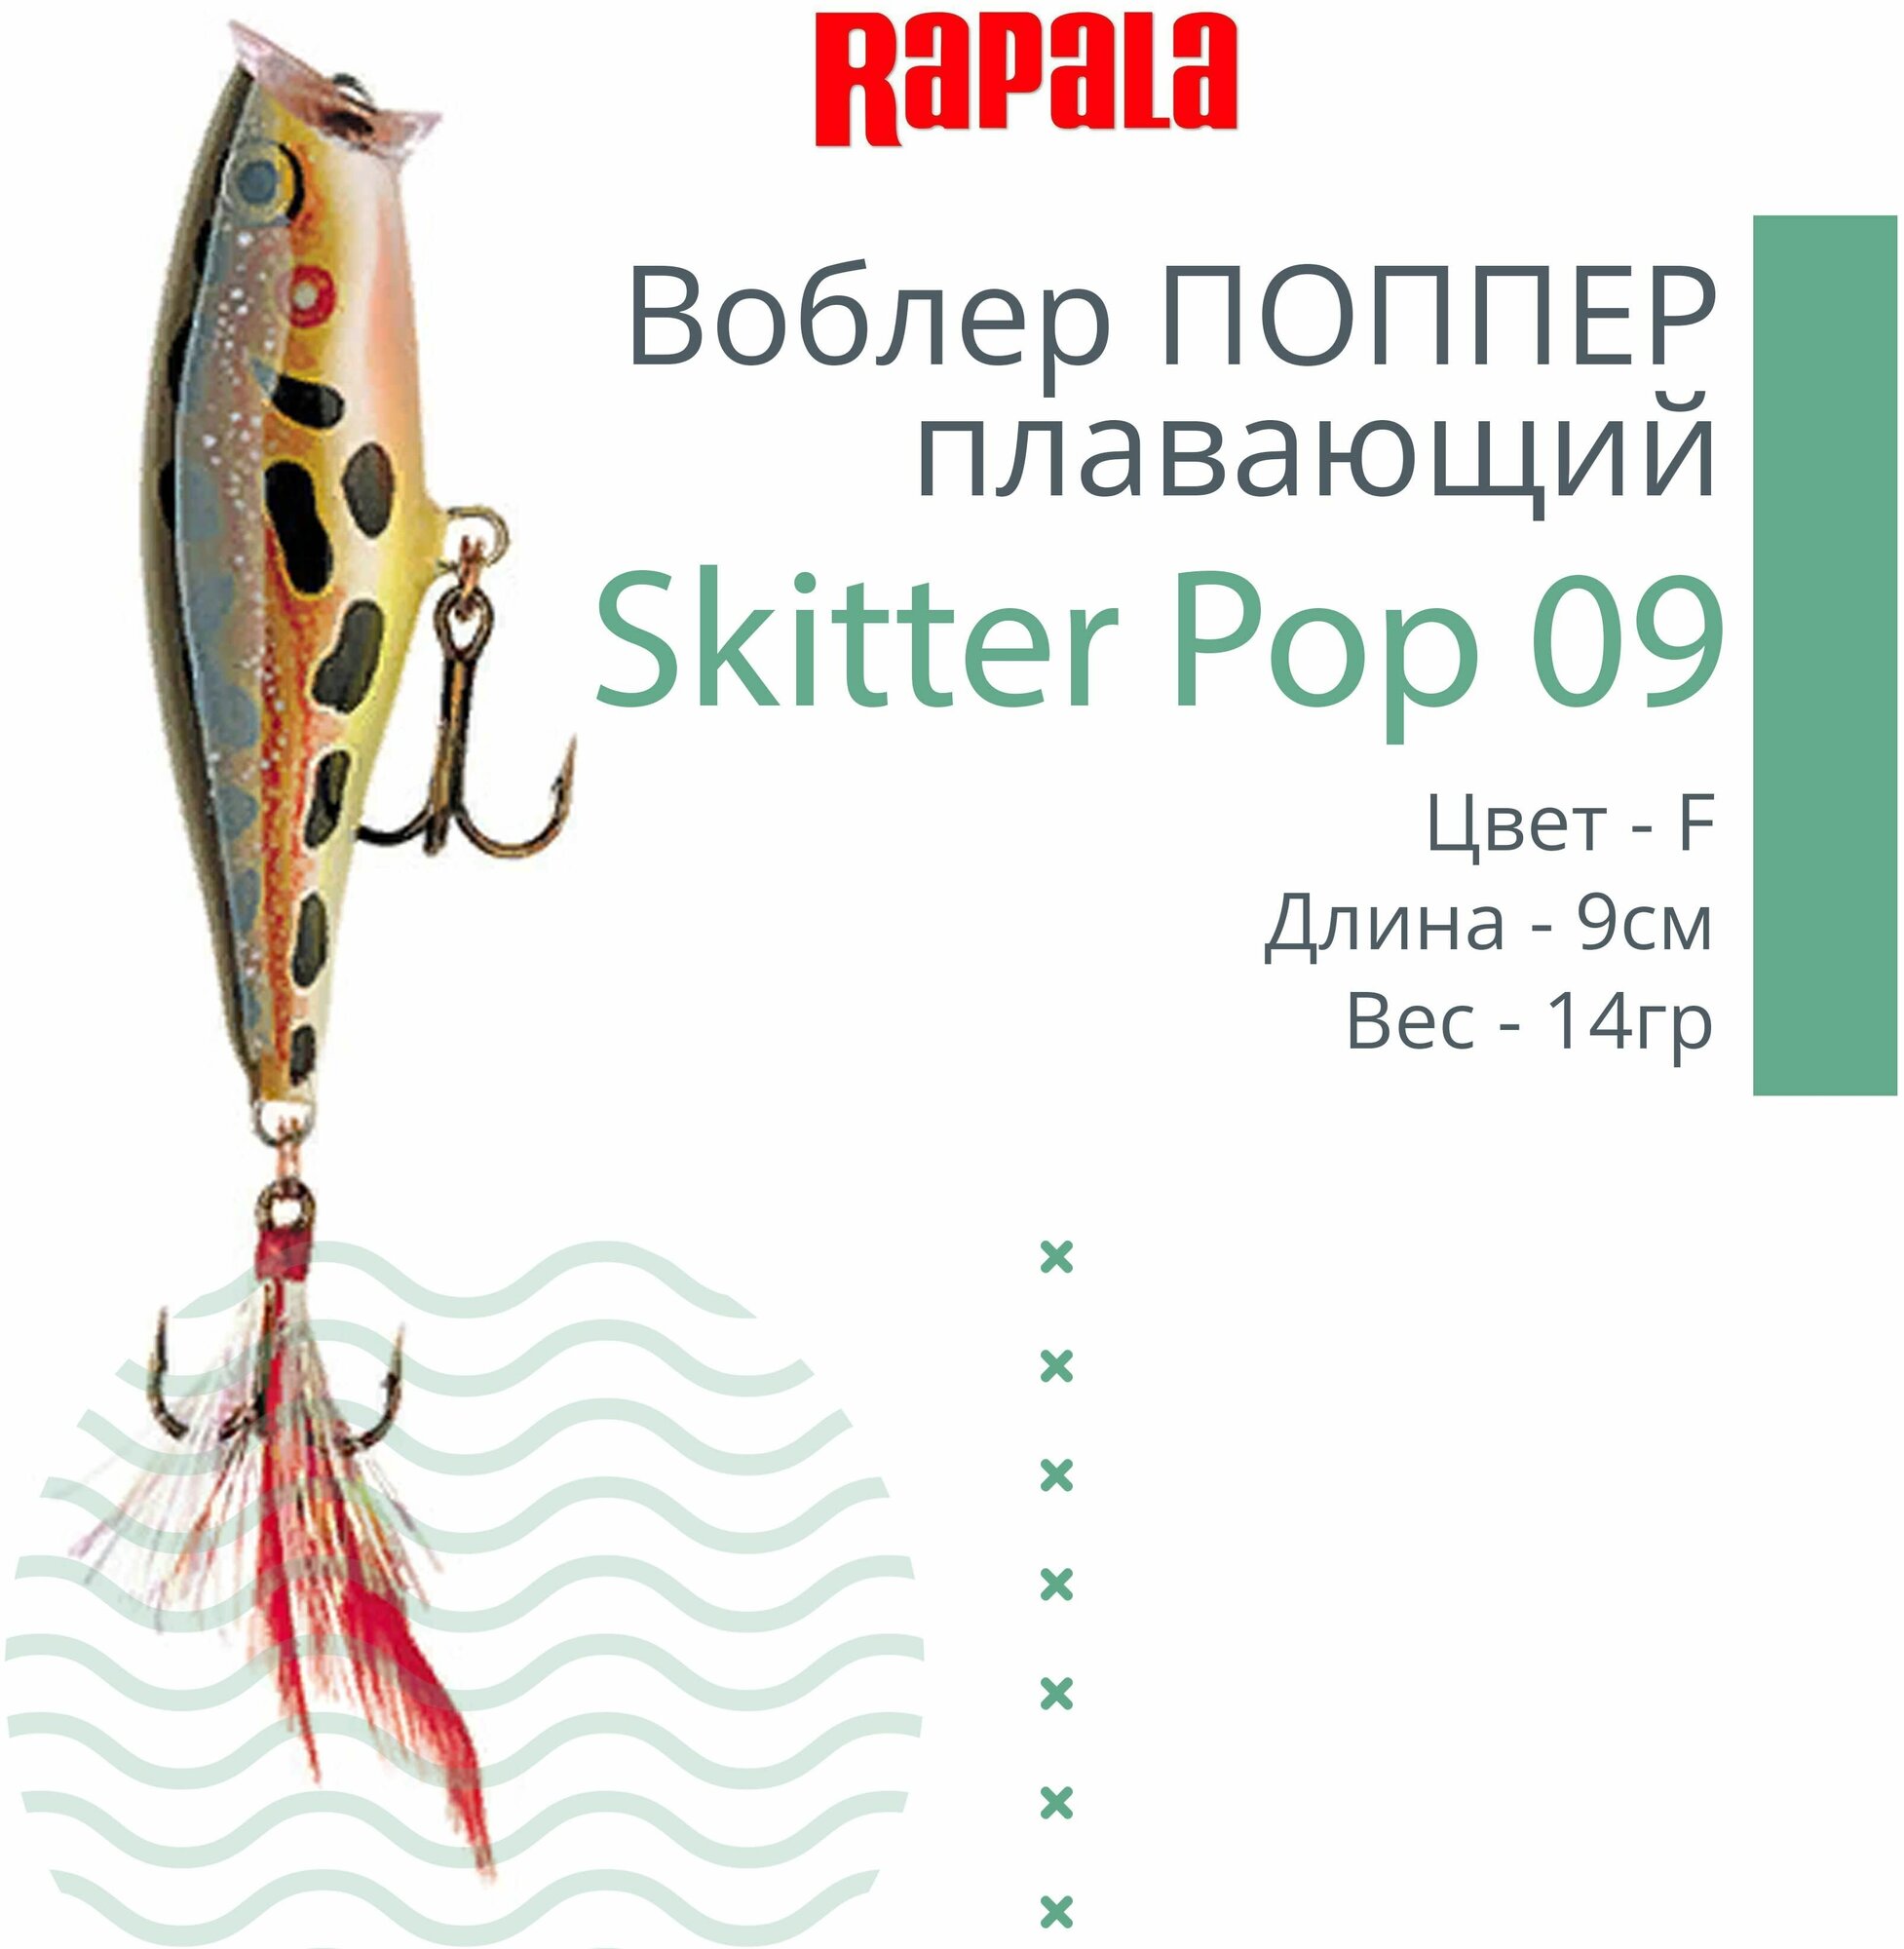 Воблер для рыбалки RAPALA Skitter Pop 09, 9см, 14гр, цвет F, плавающий